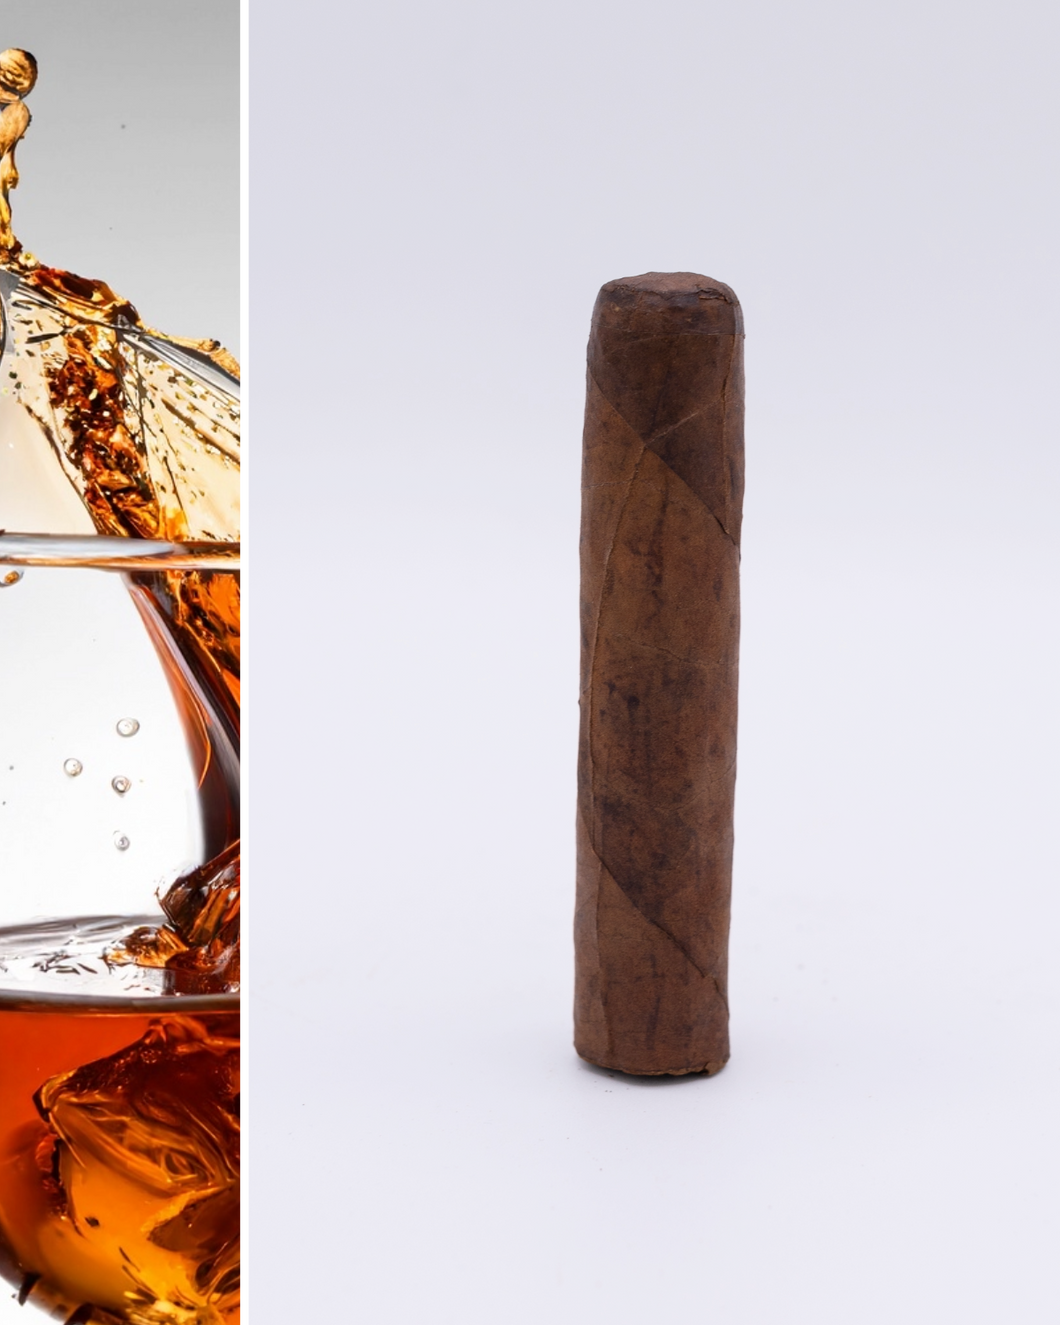 Gorilla Finger Cognac Infused Cigar